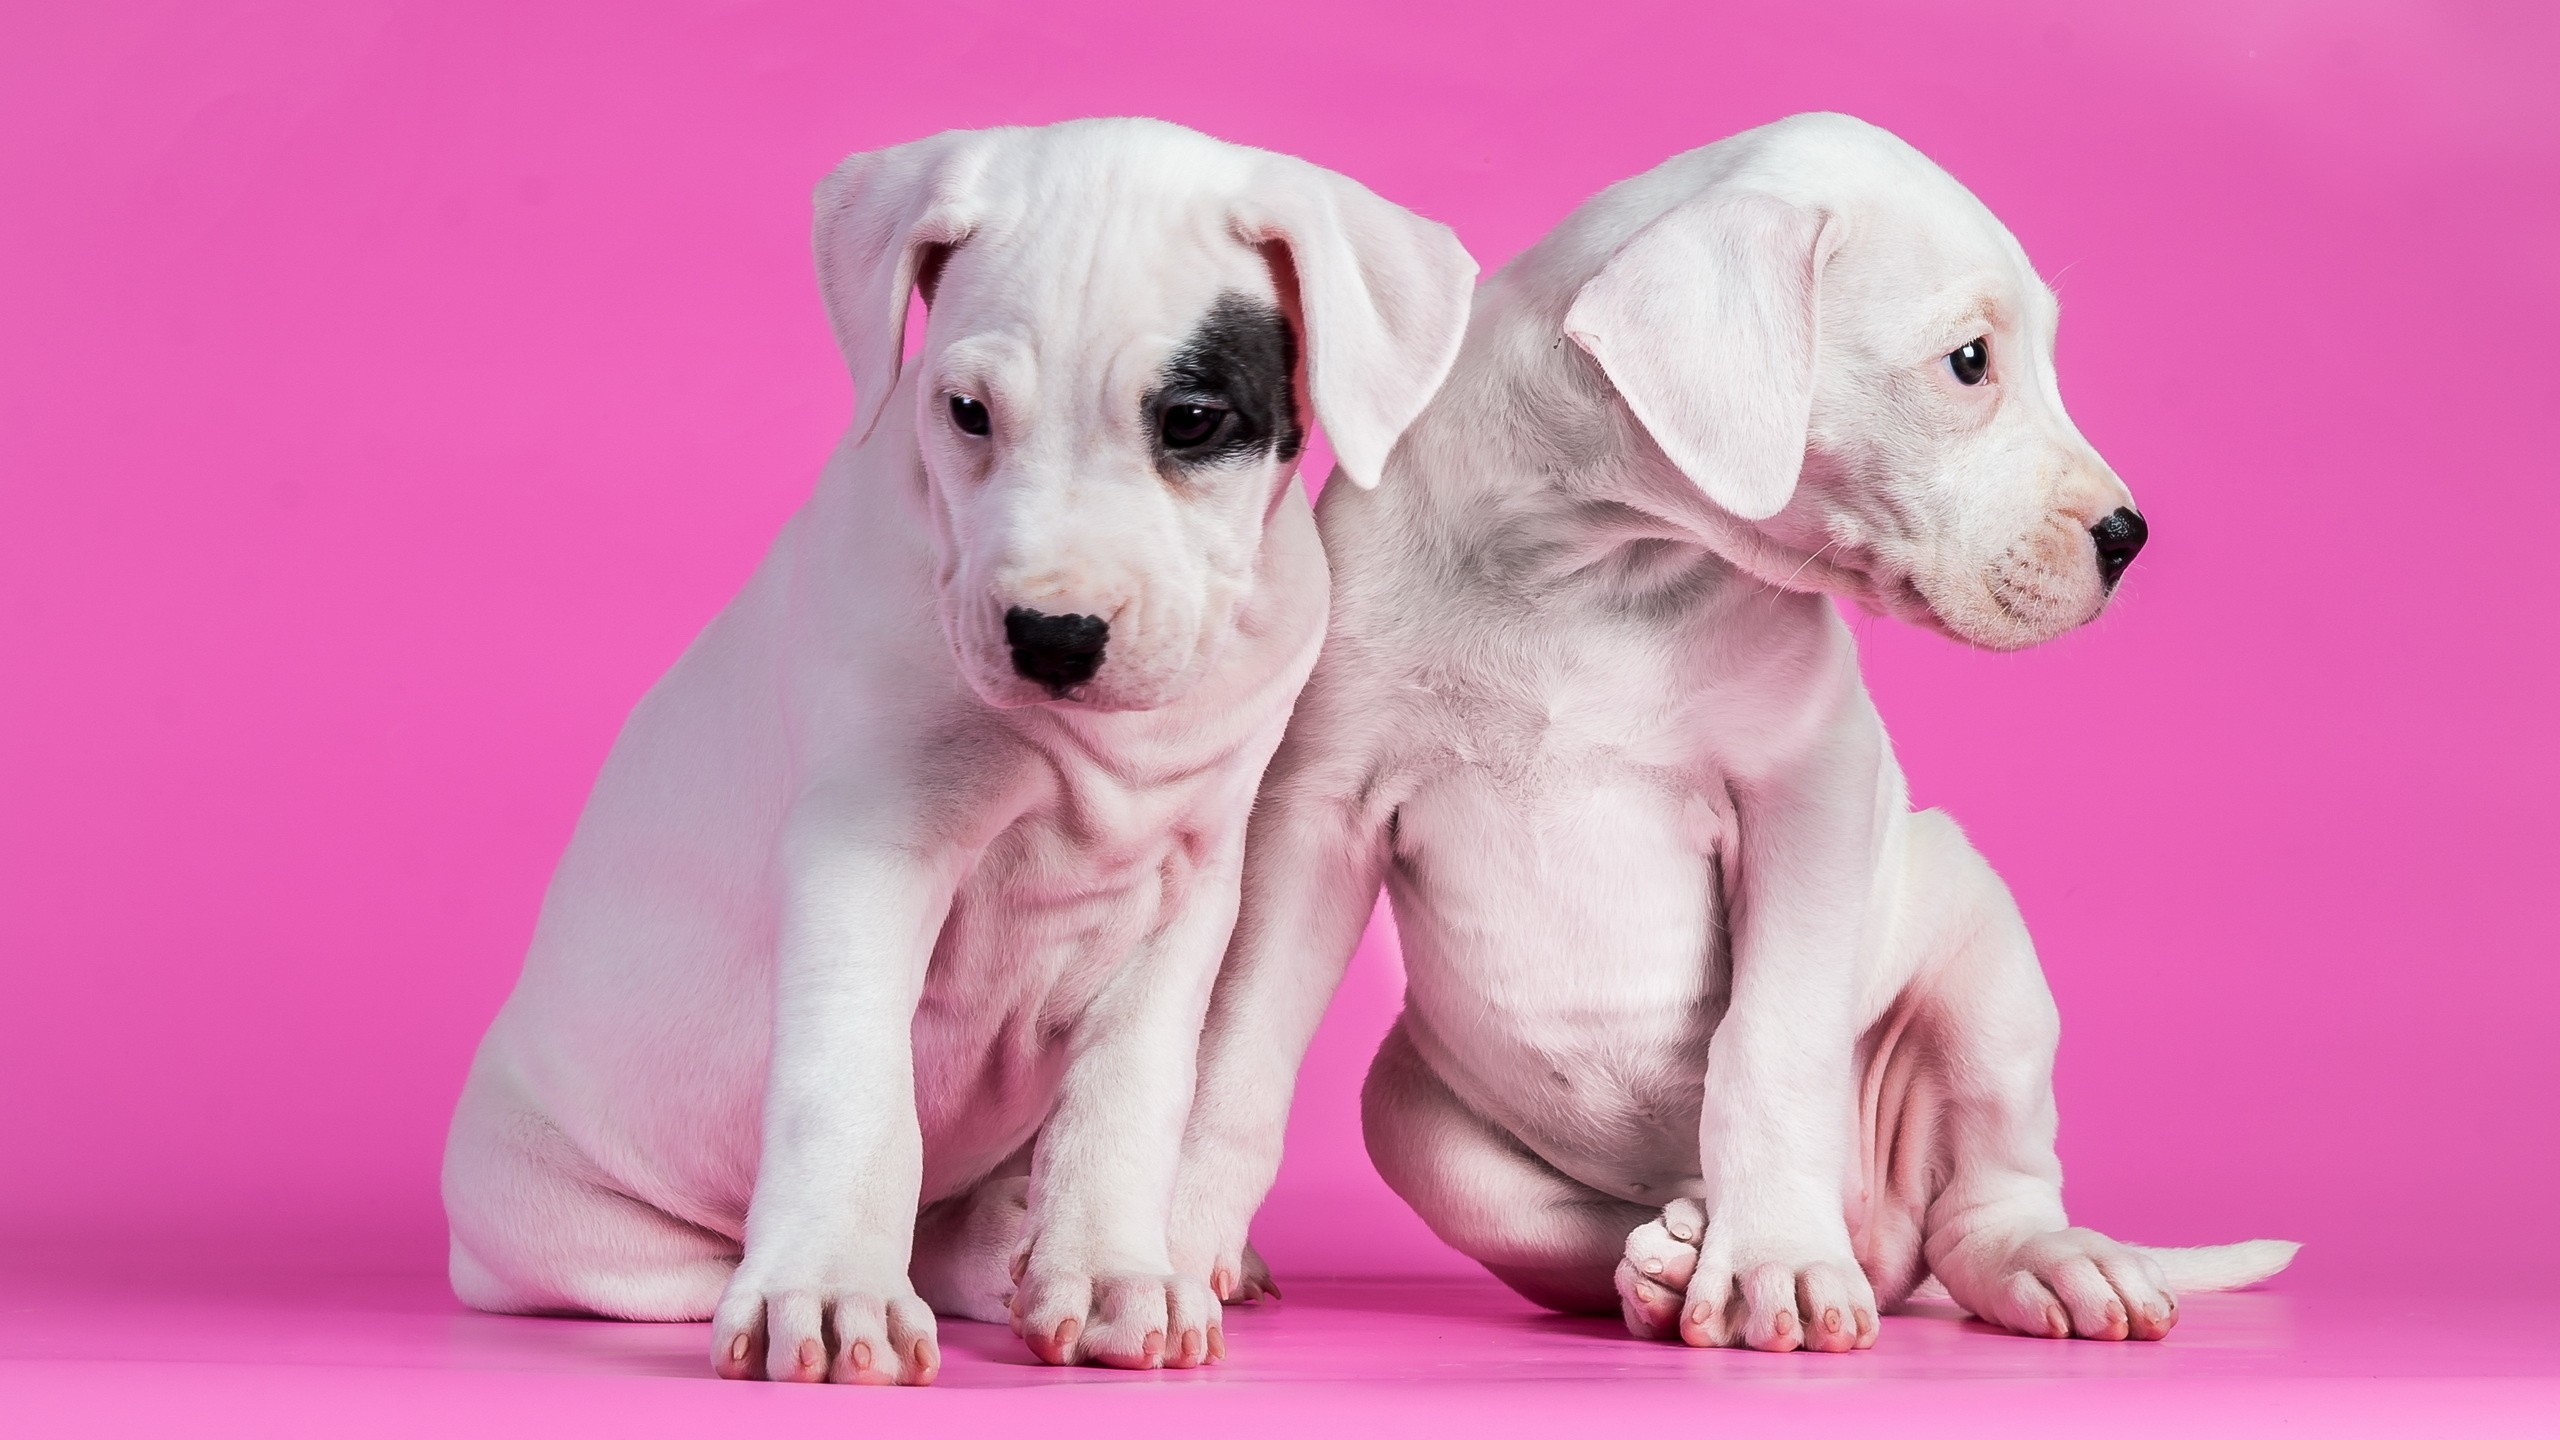 General 2560x1440 dog pink background puppies pink